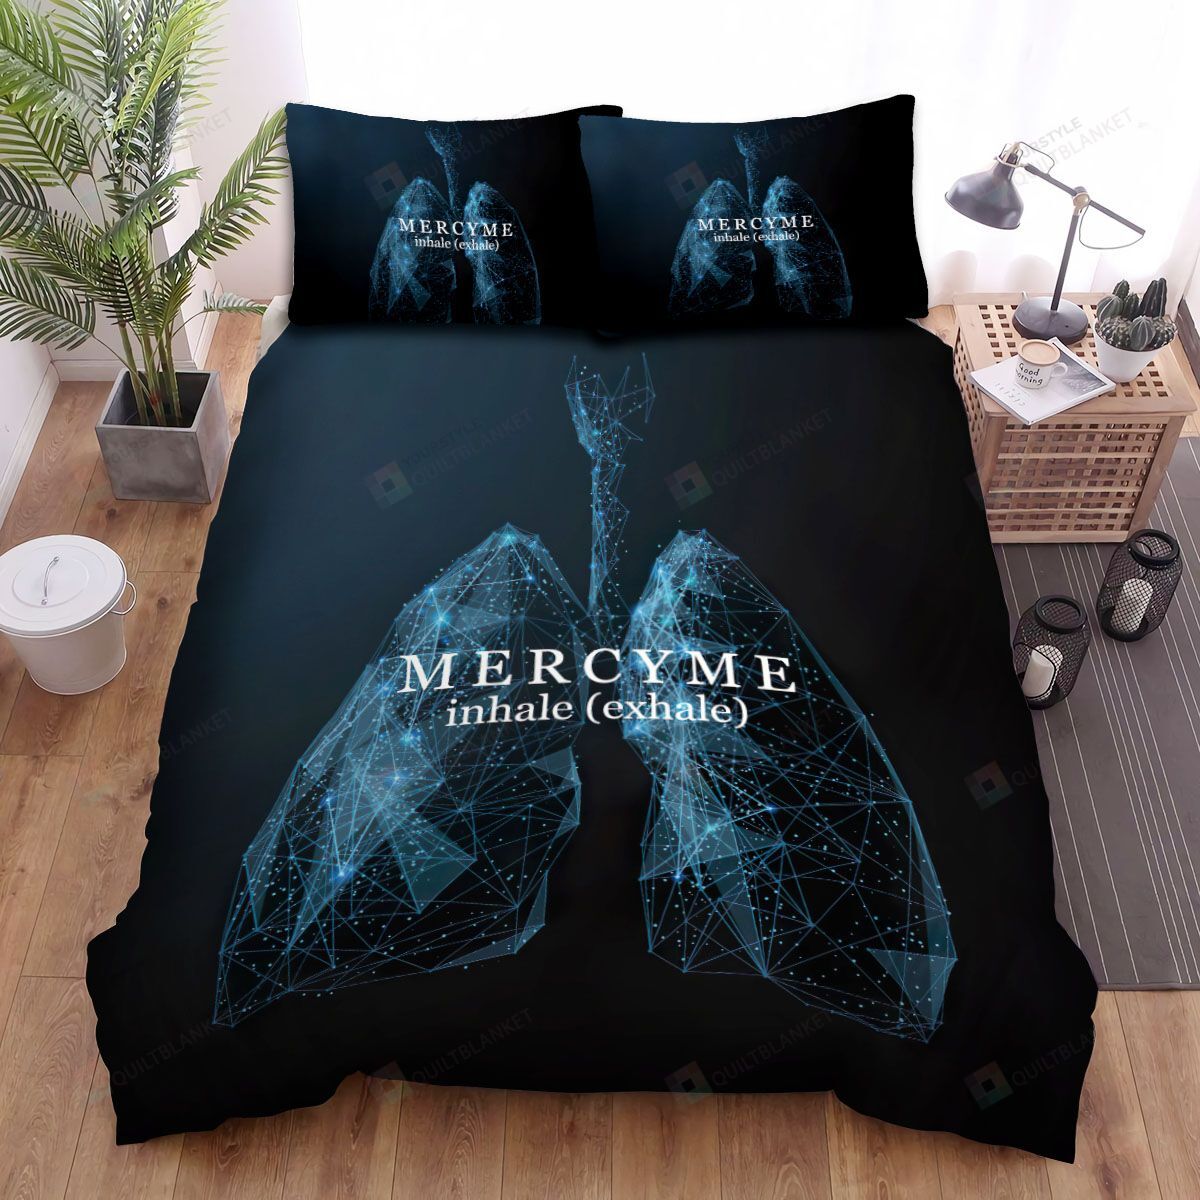 Mercyme Inhale (Exhale) Bed Sheets Spread Comforter Duvet Cover Bedding Sets